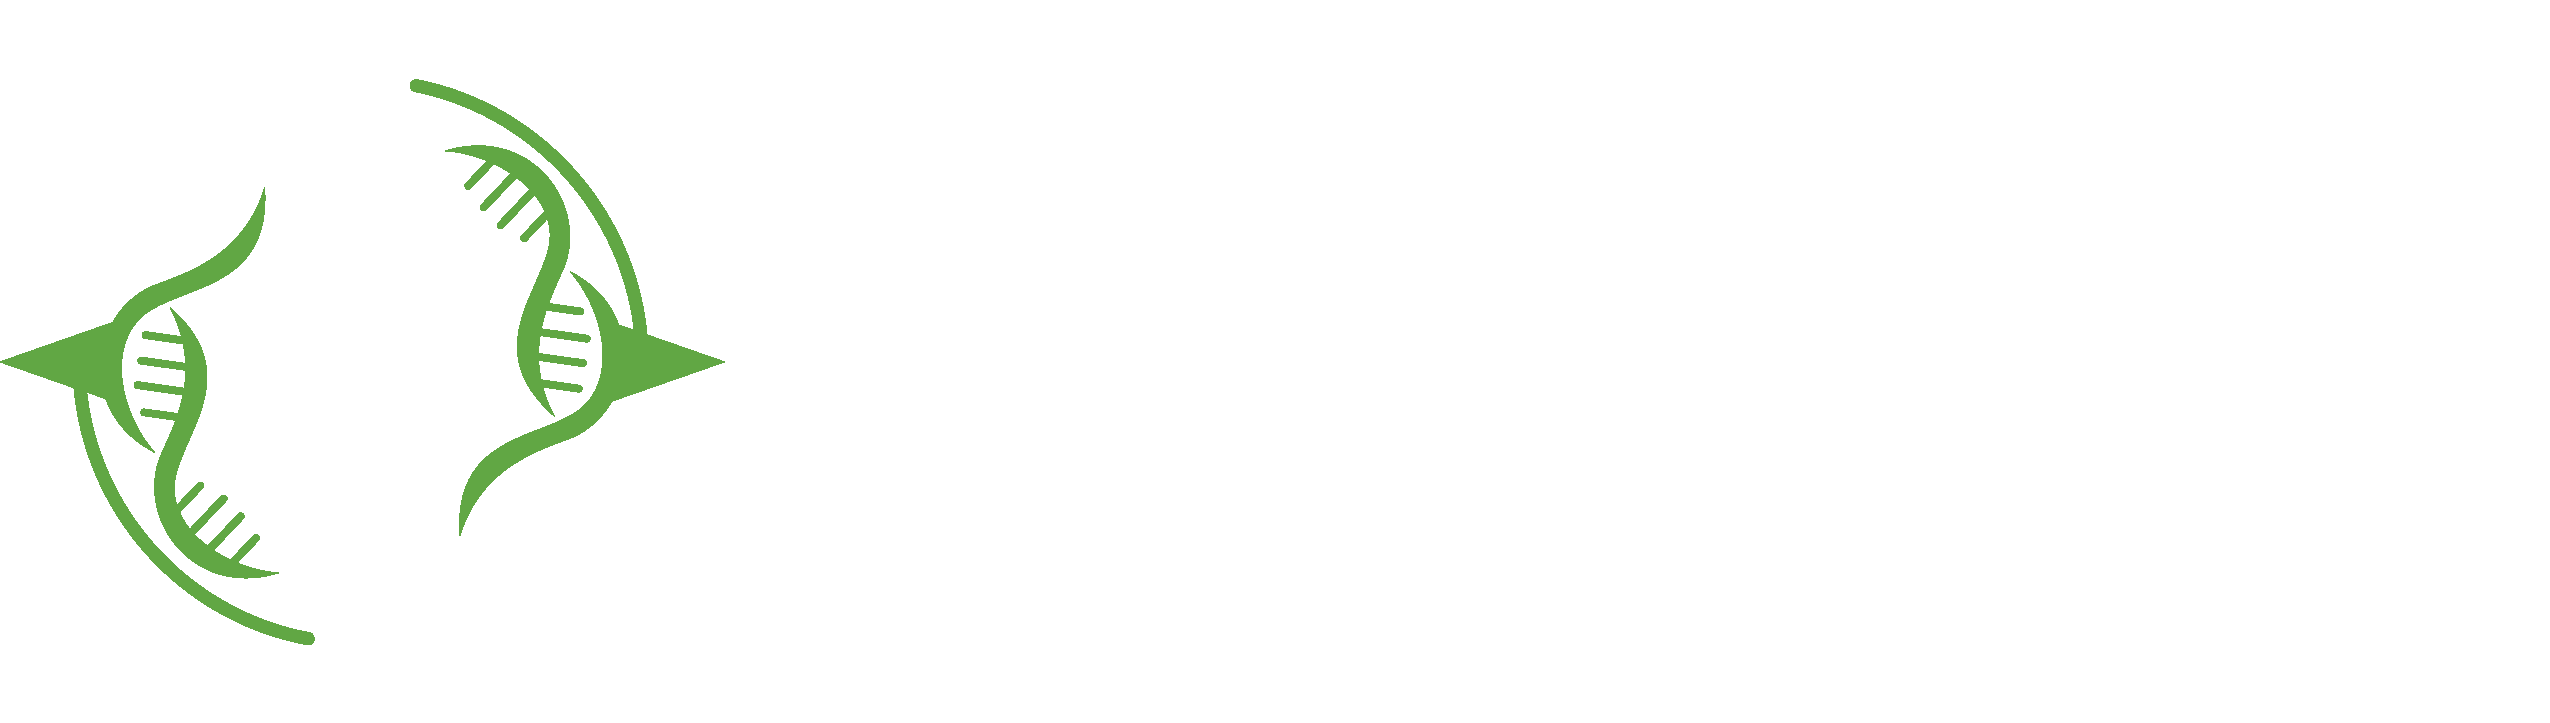 Genesis LGMD logo